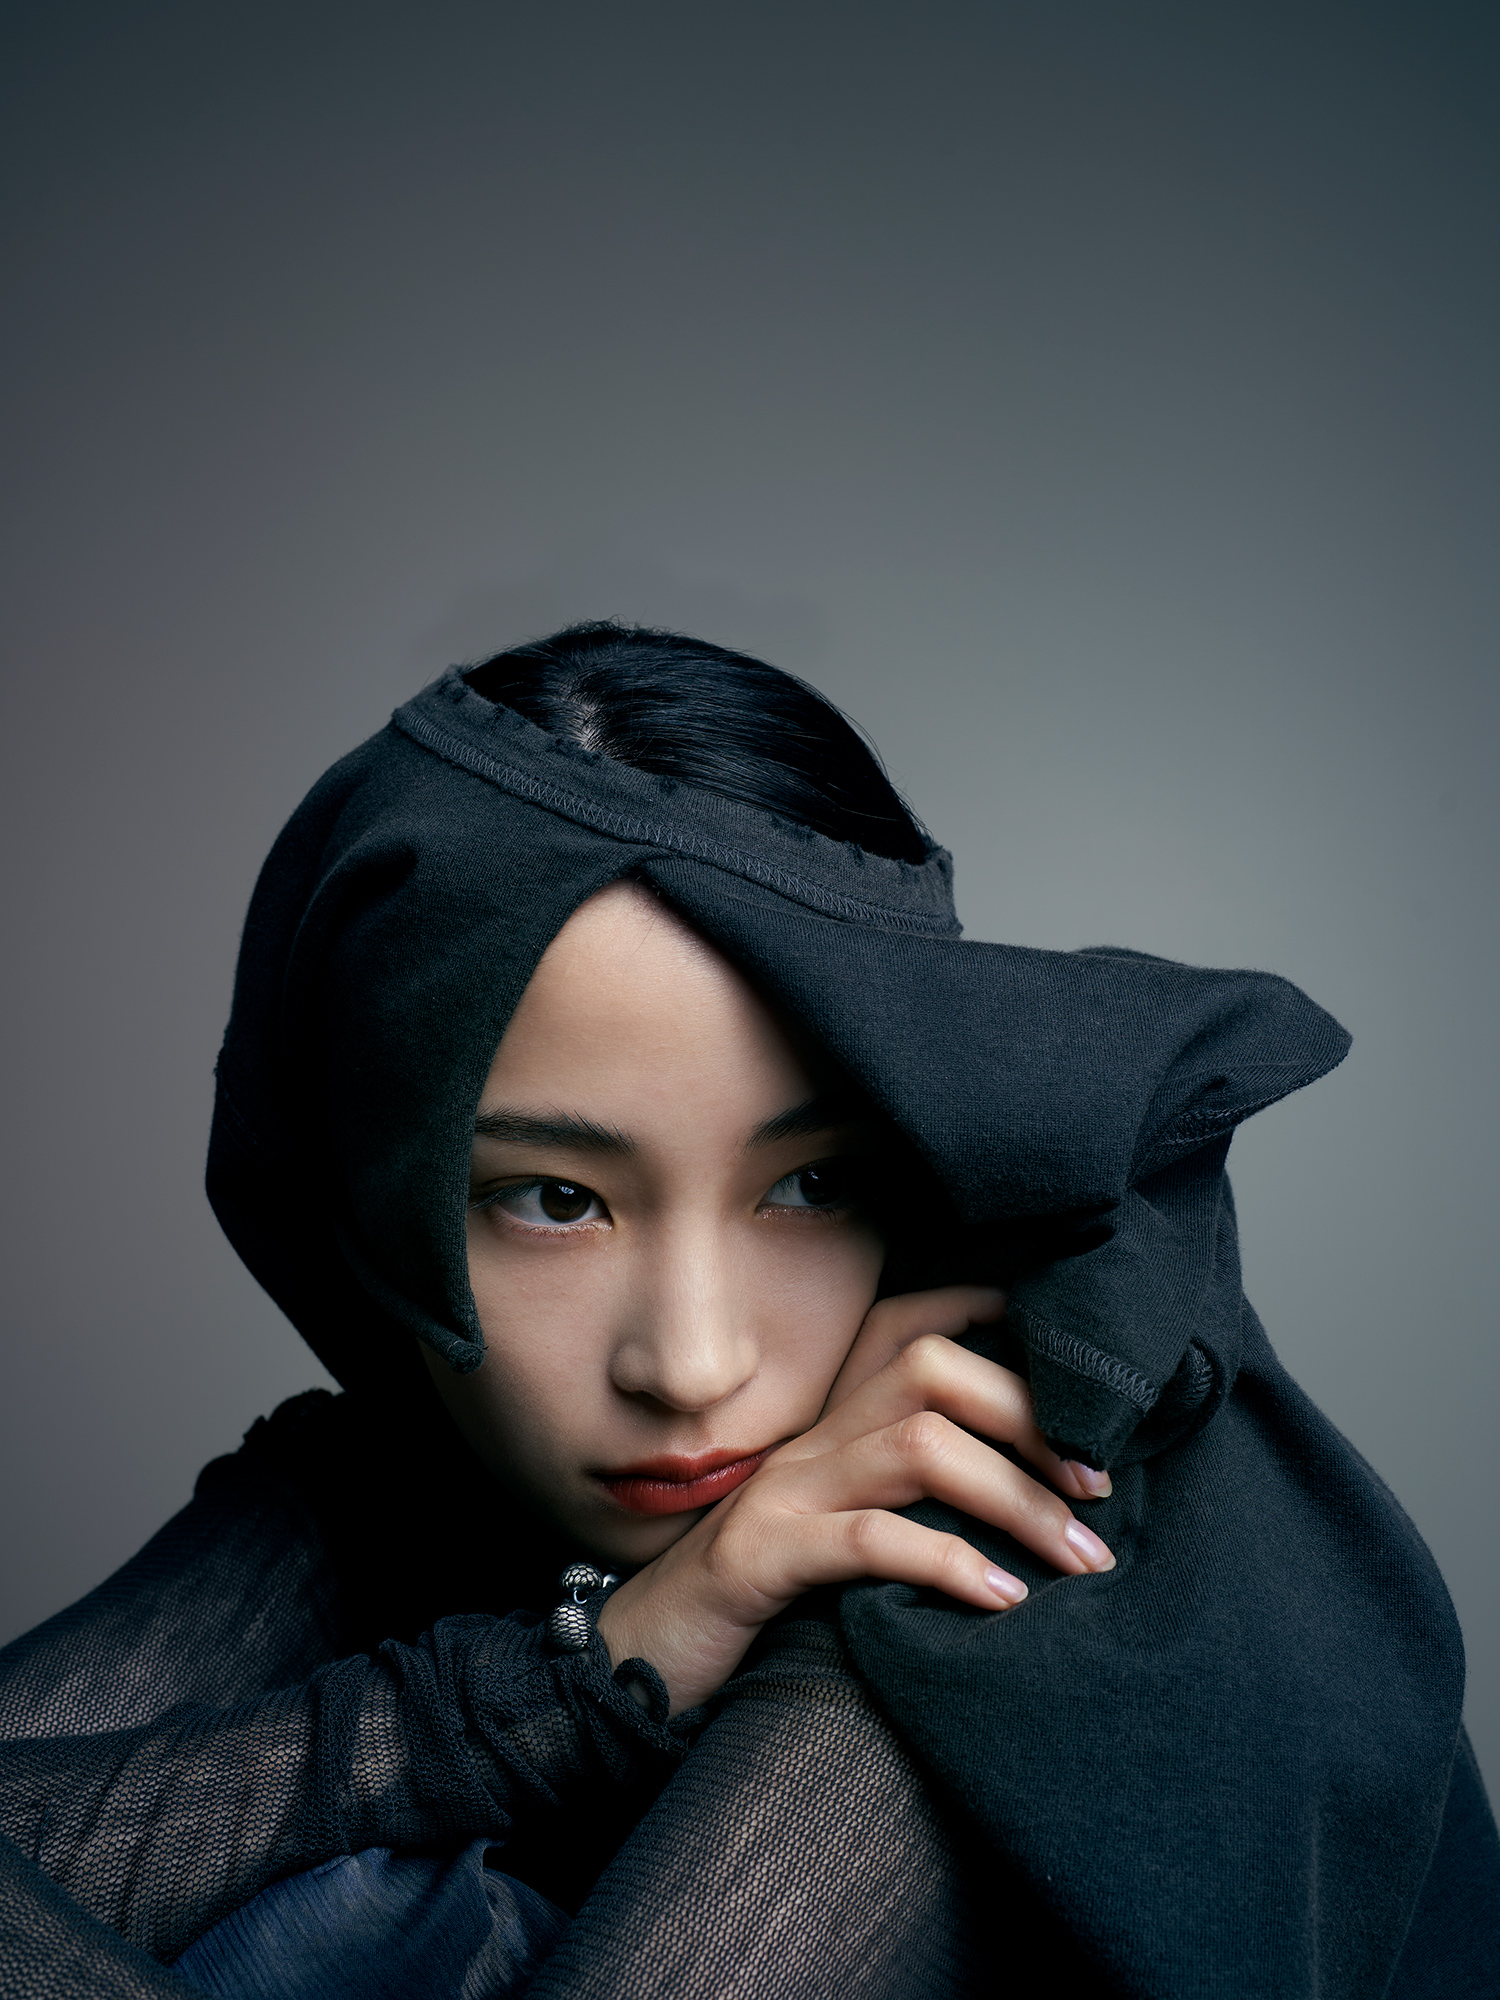 Suzu Hirose in PERVERZE featured on DEW Magazine | PERVERZE